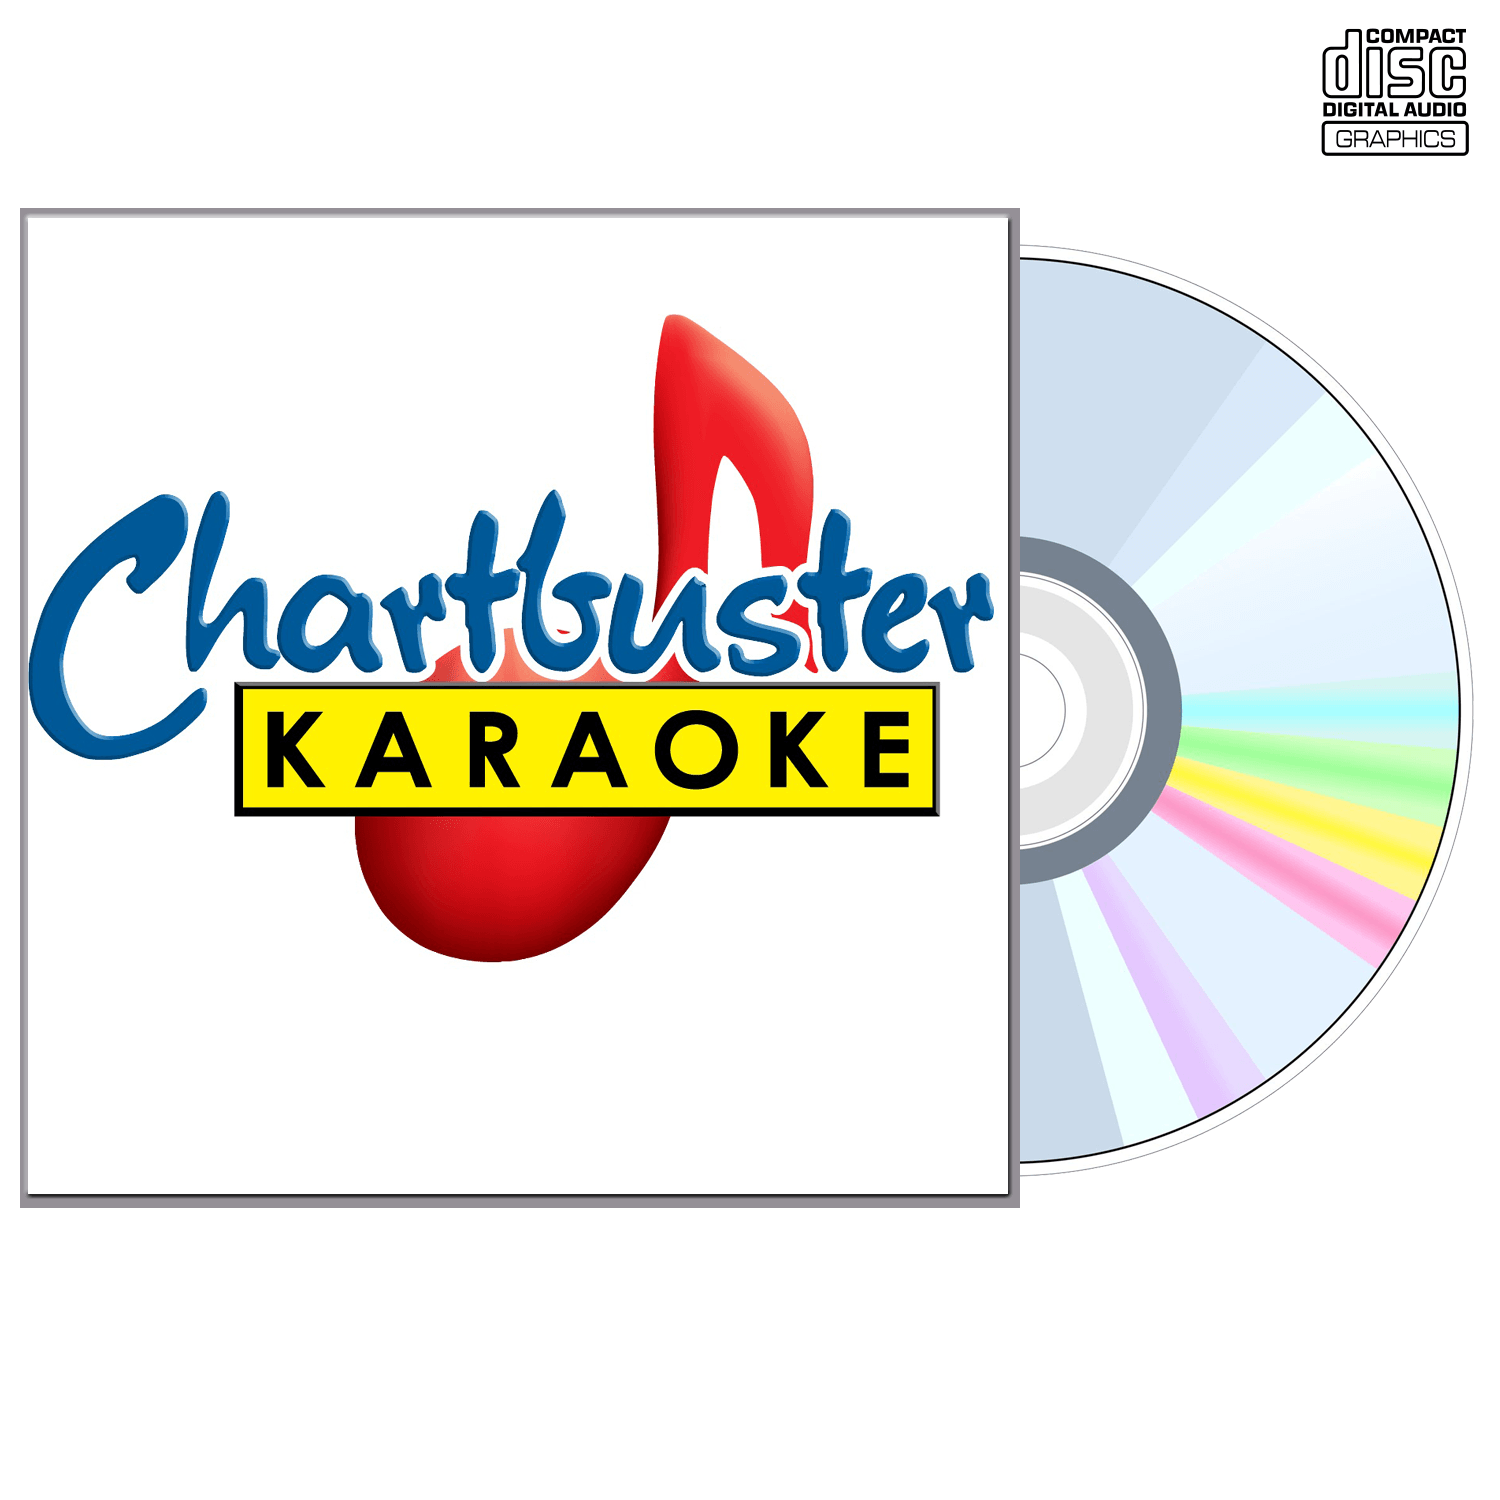 Wilson Pickett - CD+G - Chartbuster Karaoke - Karaoke Home Entertainment